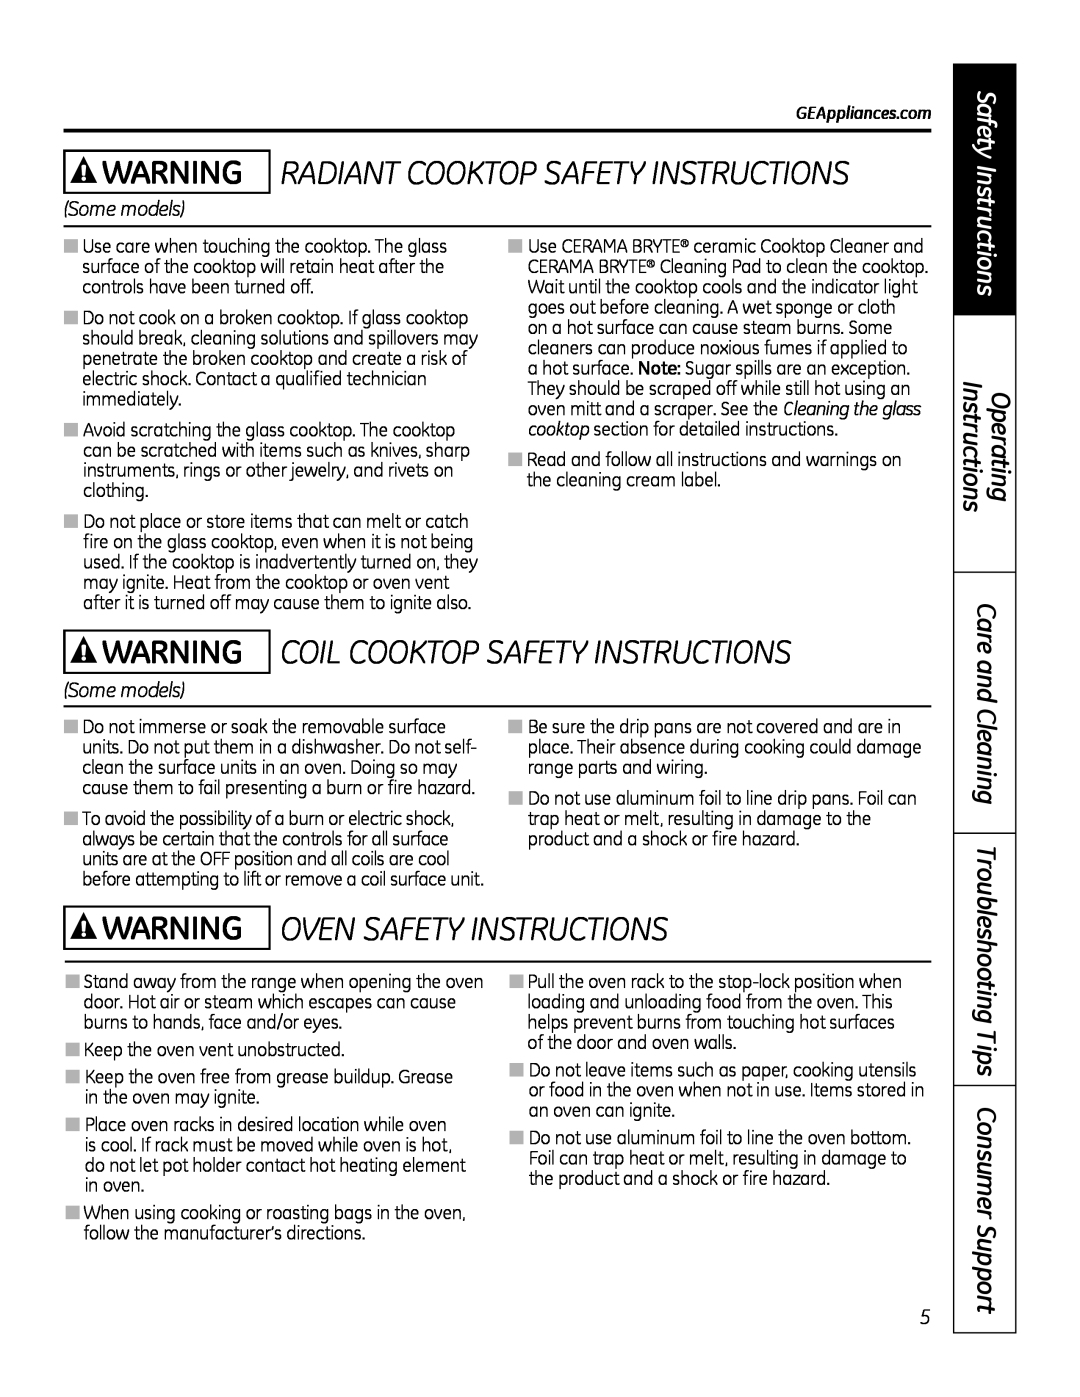 GE 49-80591-2 WARNING RADIANT COOKTOP SAFETY INSTRuCTIONS, WARNING COIl COOKTOP SAFETY INSTRuCTIONS, Cleaning, Some models 